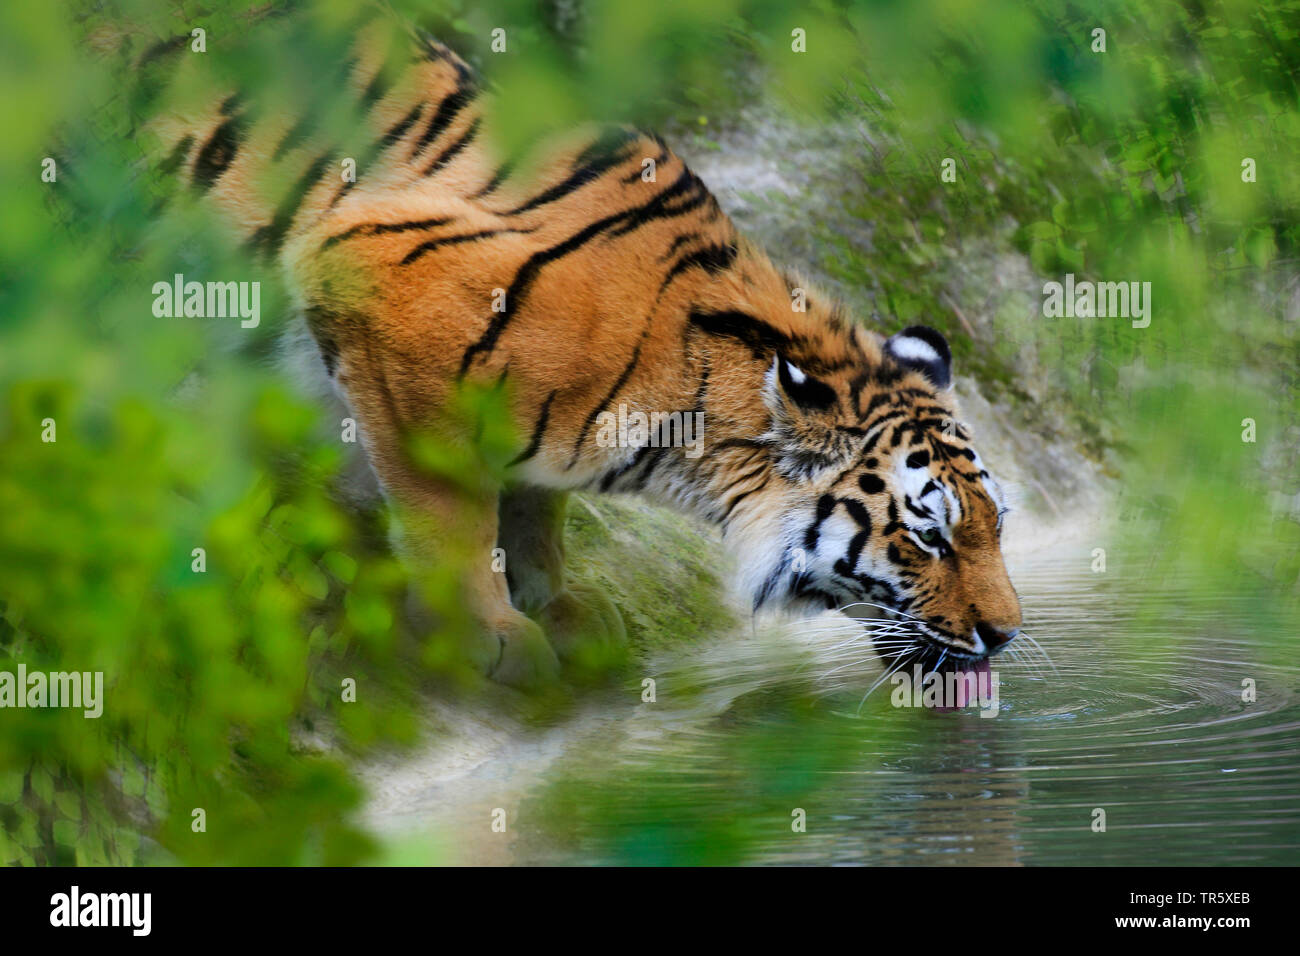 tiger (Panthera tigris), drinking, half-length portrait Stock Photo